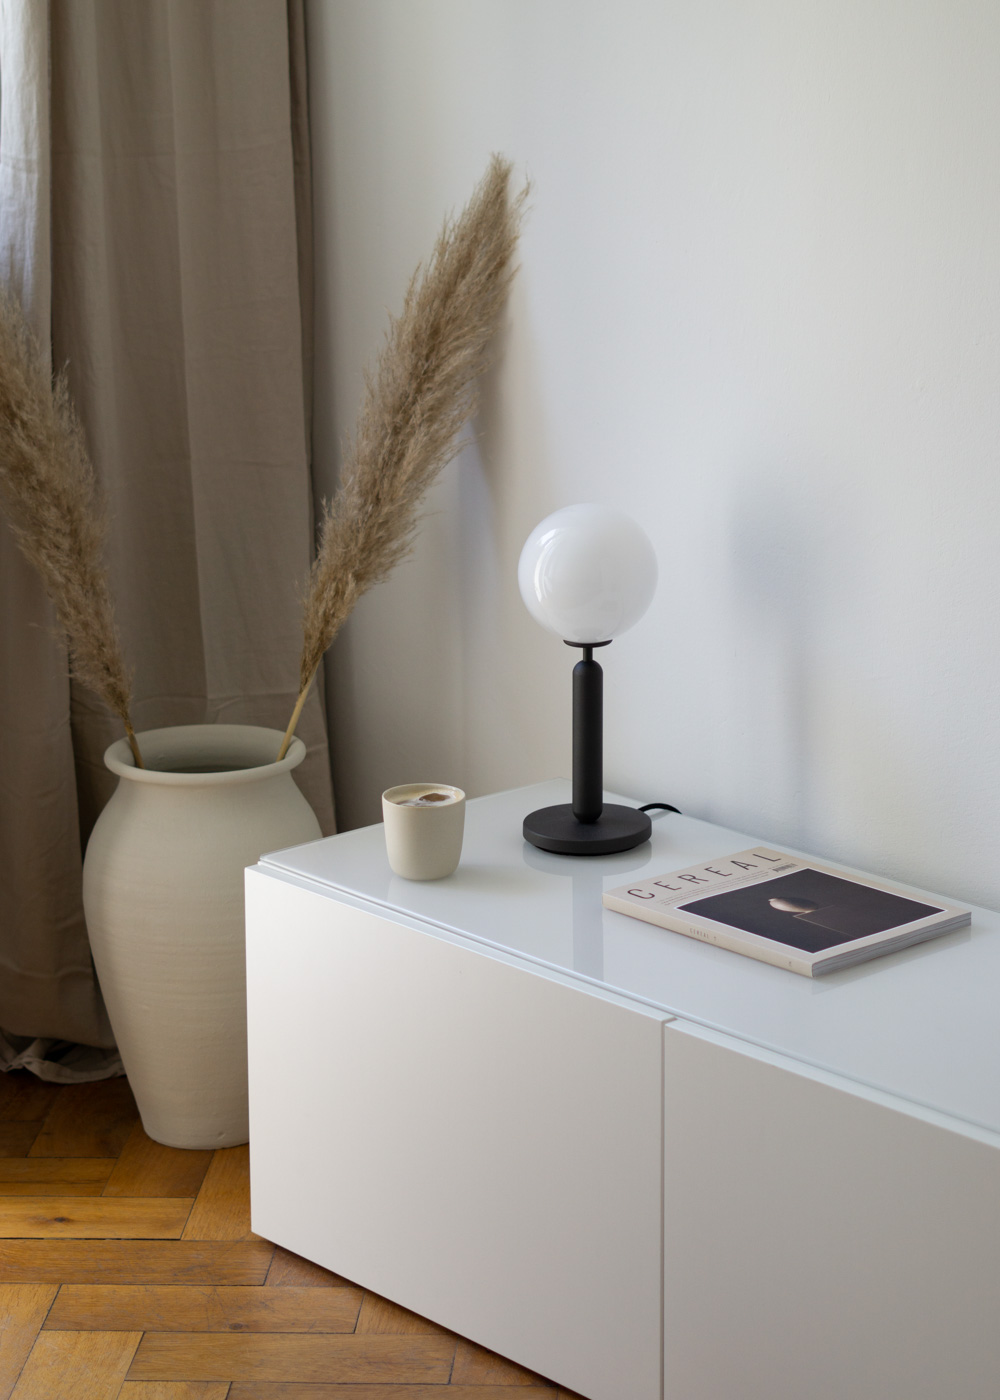 Nuura Lighting Danish Design Miira Lamp Scandinavian Style Minimal Interior Neutral Home Designer Furniture Nordic Inspo White Decor Scandi Aesthetic Glass Ball 19 Rg Daily